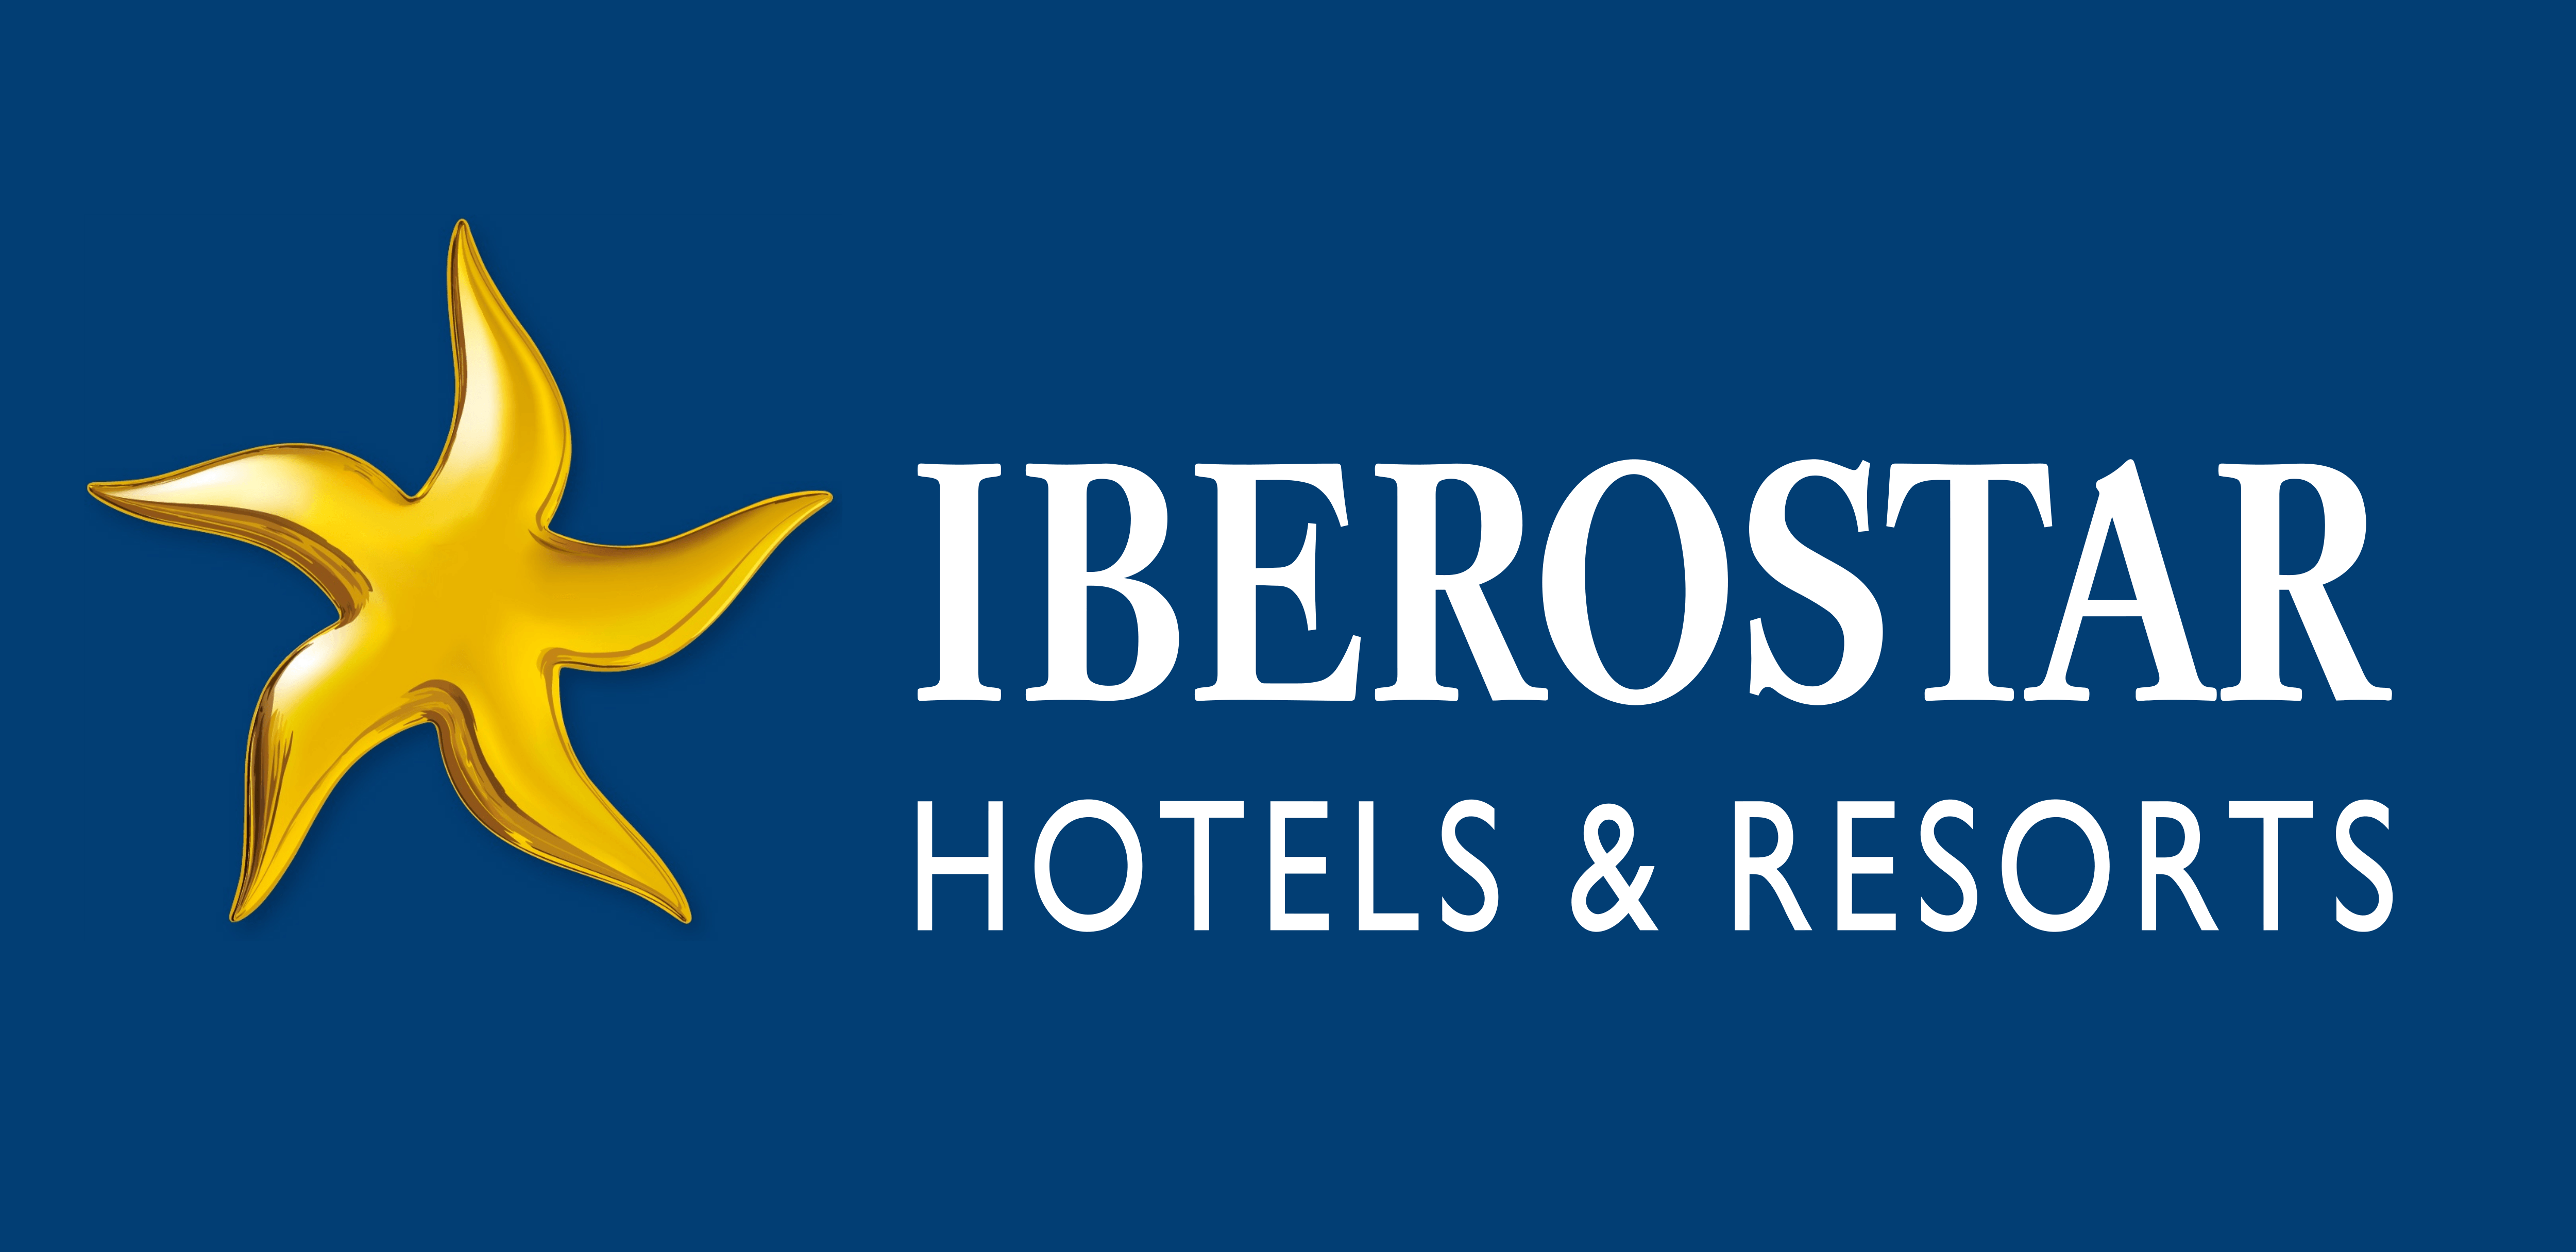 Iberostar Logo - Iberostar Hotels & Resorts